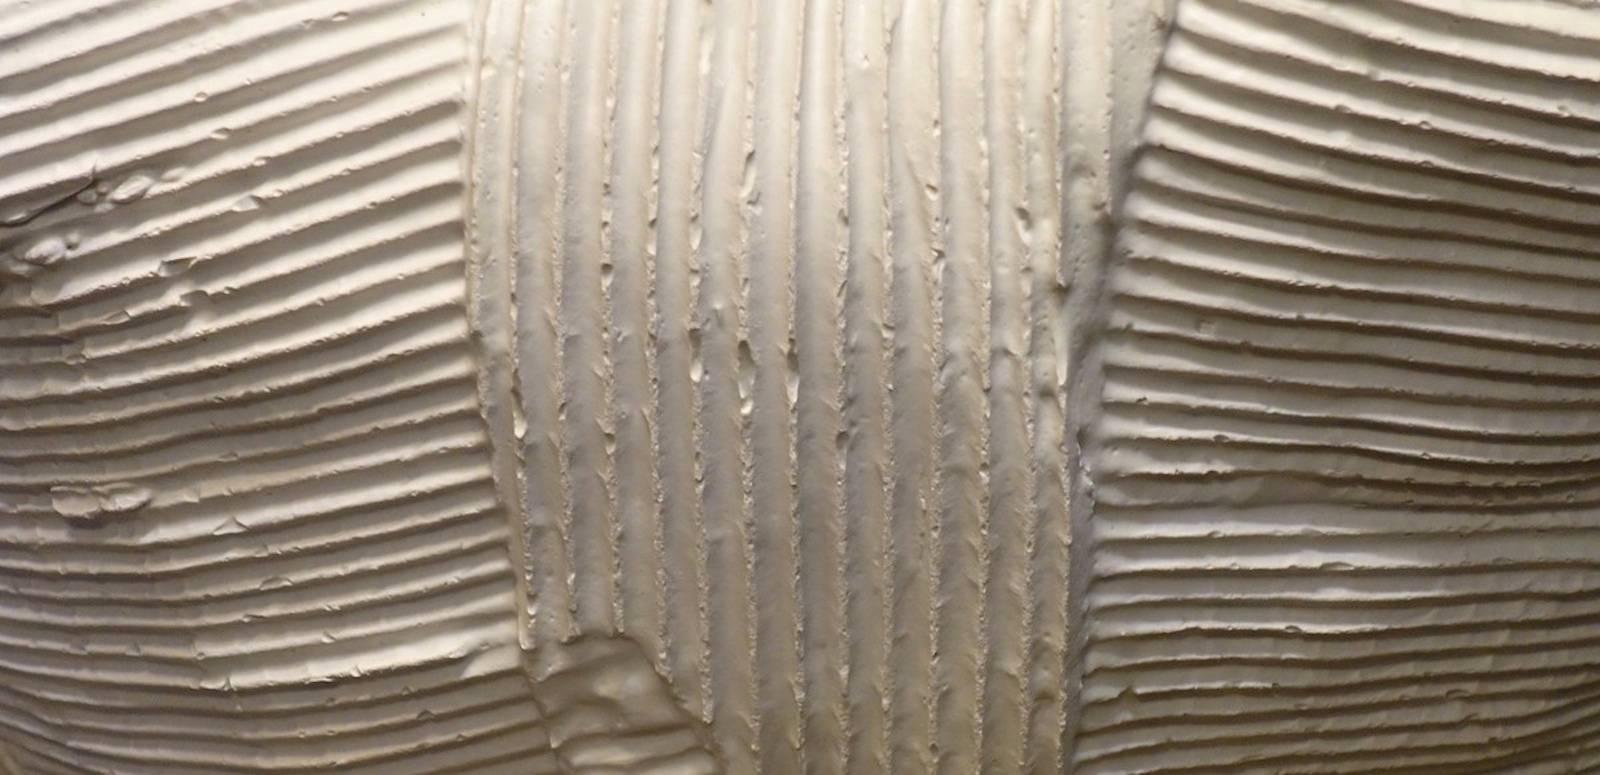 Contemporary Italian large white handmade ceramic bowl with corrugated cardboard design.
   